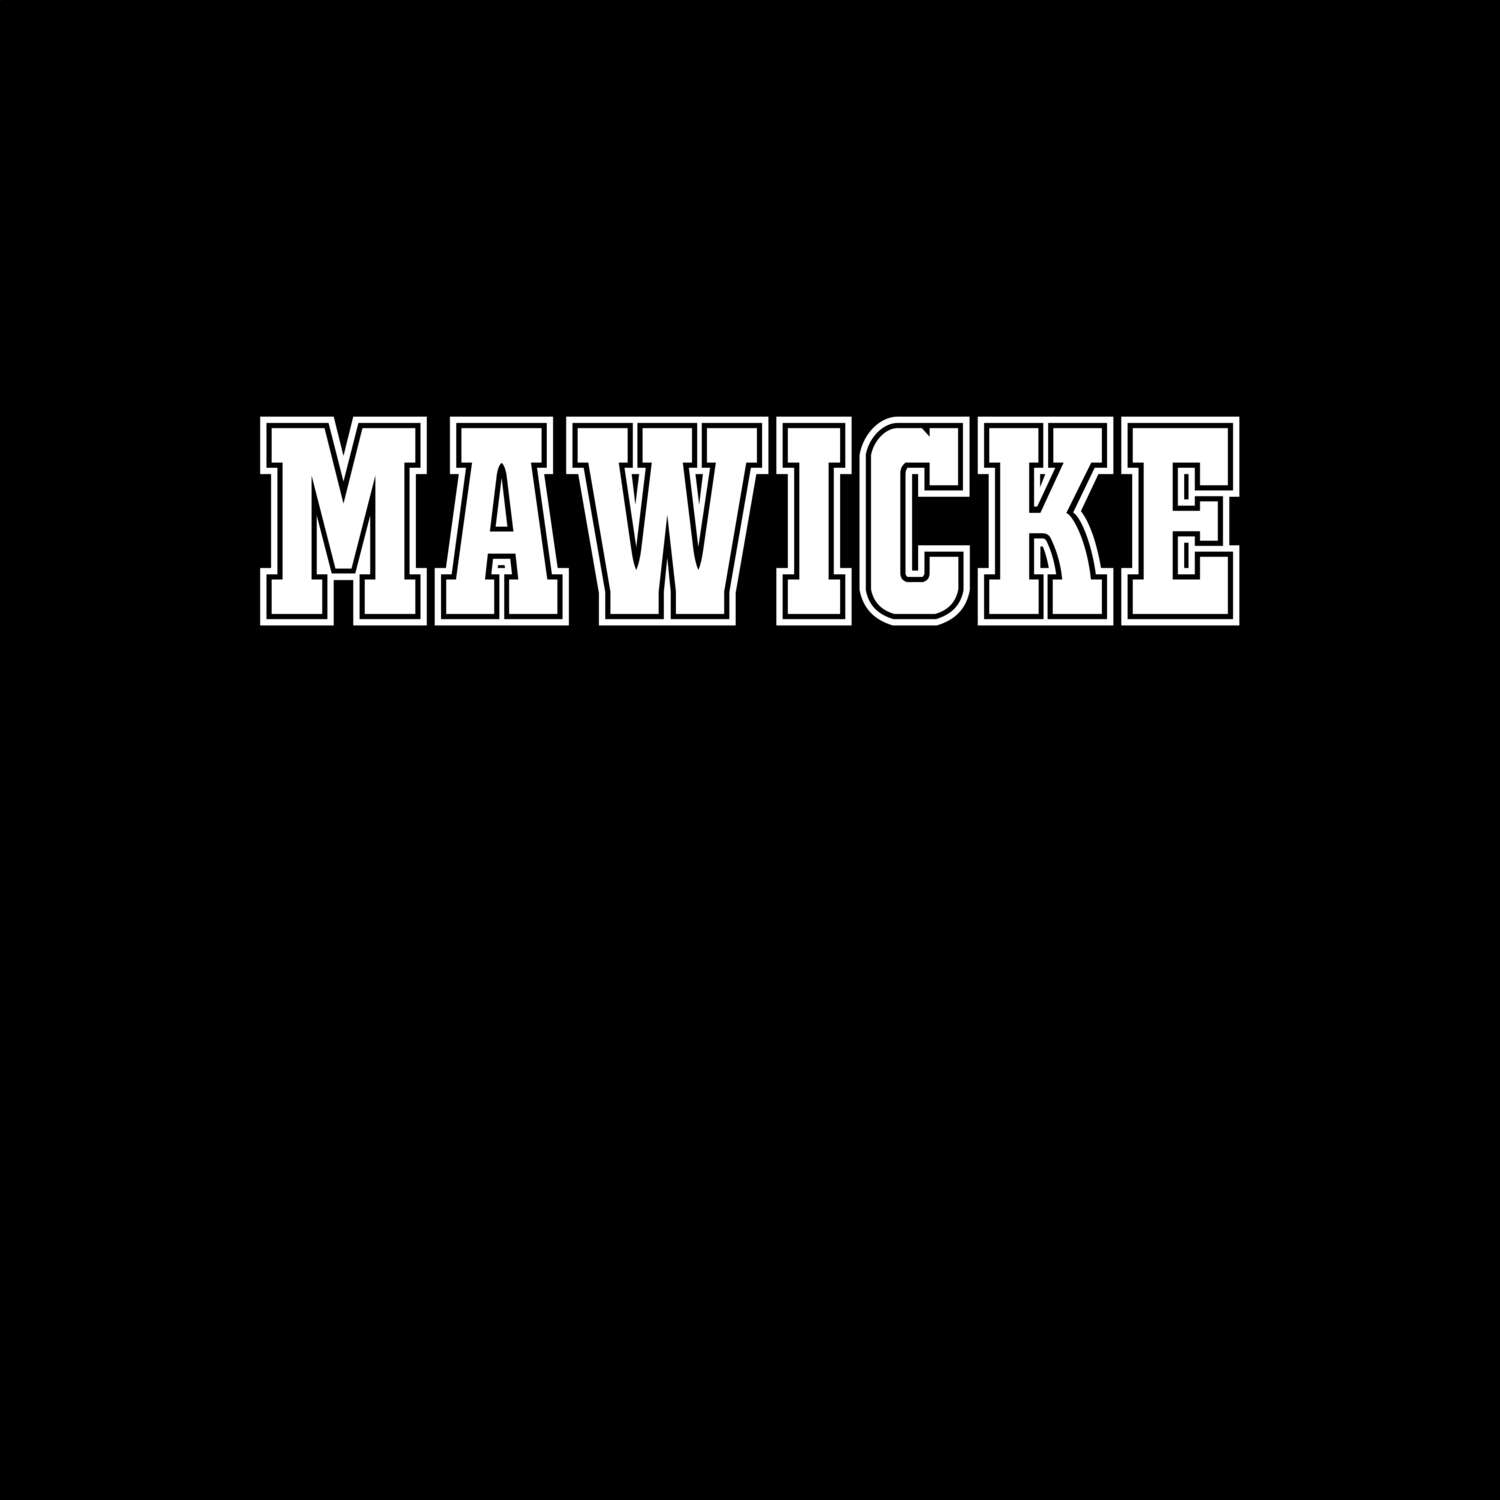 Mawicke T-Shirt »Classic«